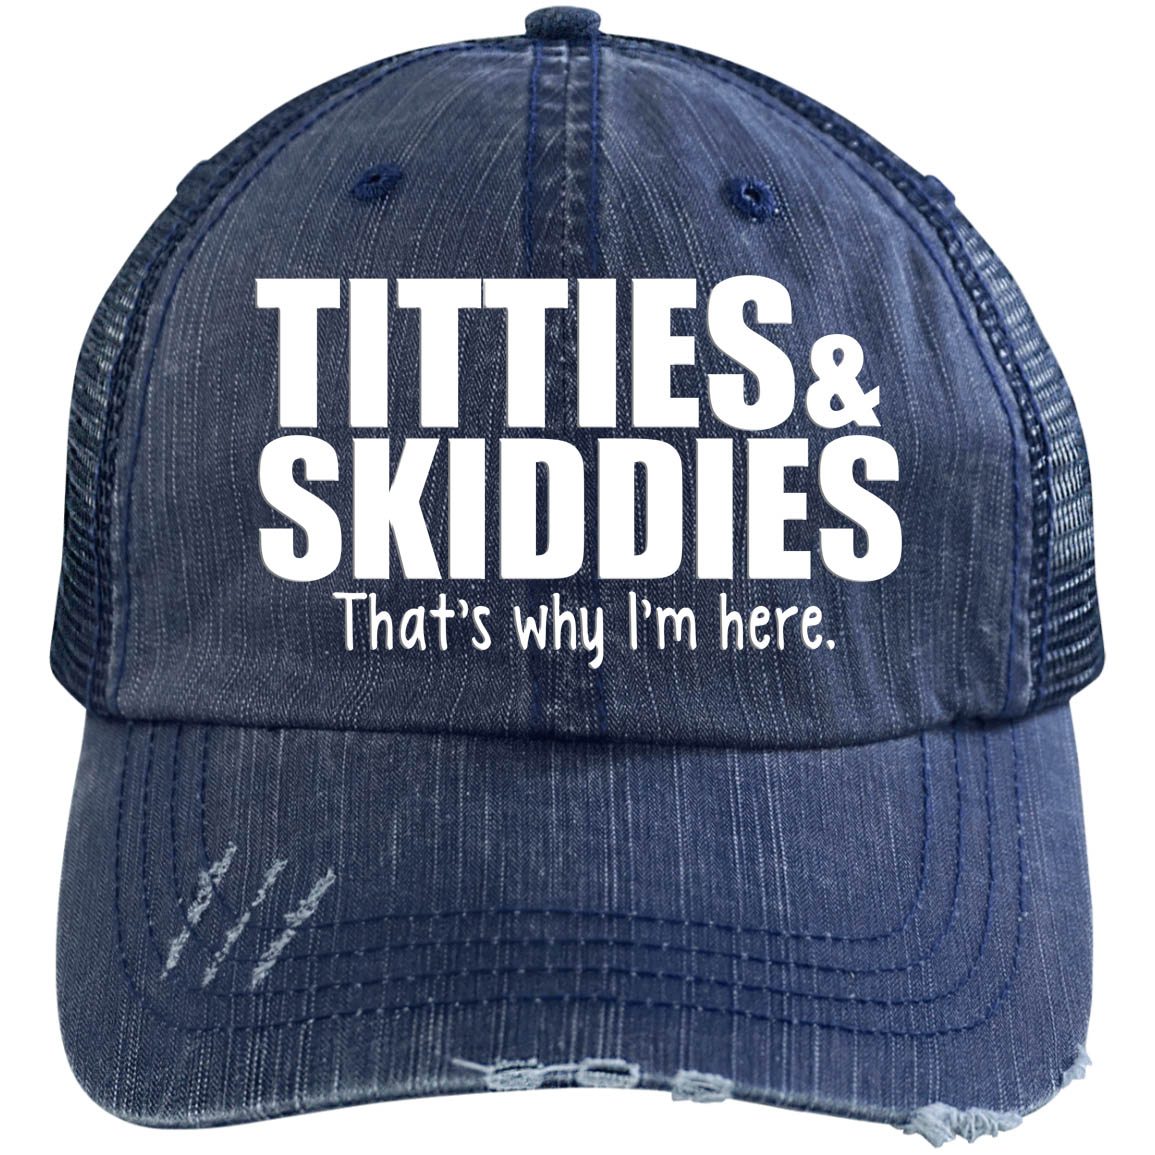 Hats - Titties & Skiddies - Distressed Unstructured Trucker Cap